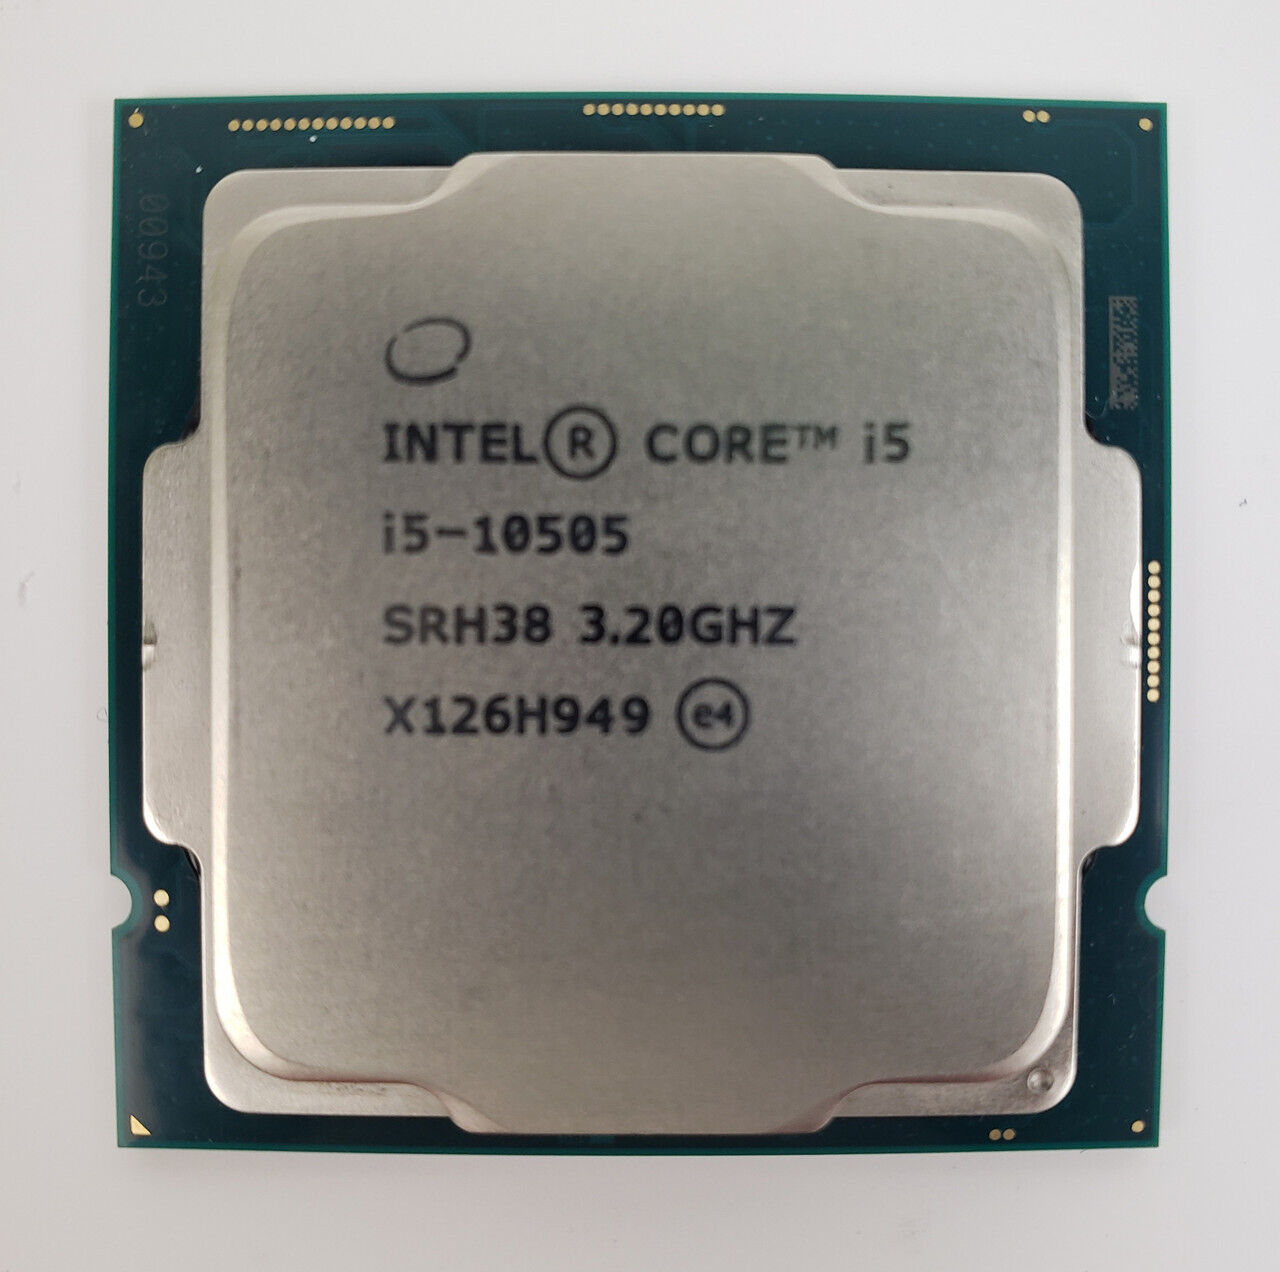 Intel Core i5-10505 SRH38 3.20GHz Processor | Grade A